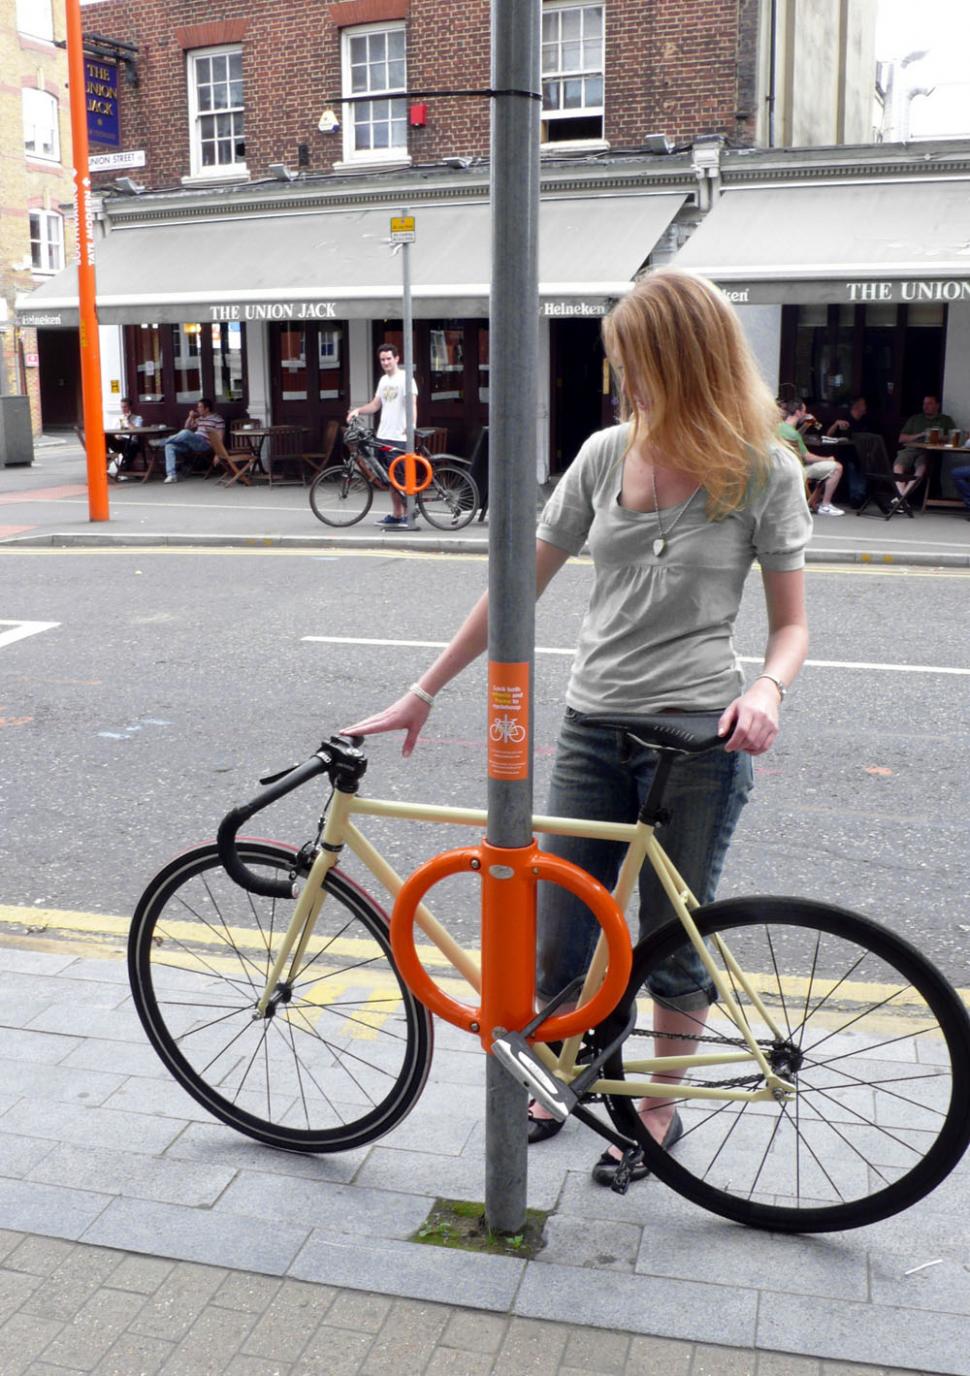 Cyclehoop bring municipal bike pumps to London's streets